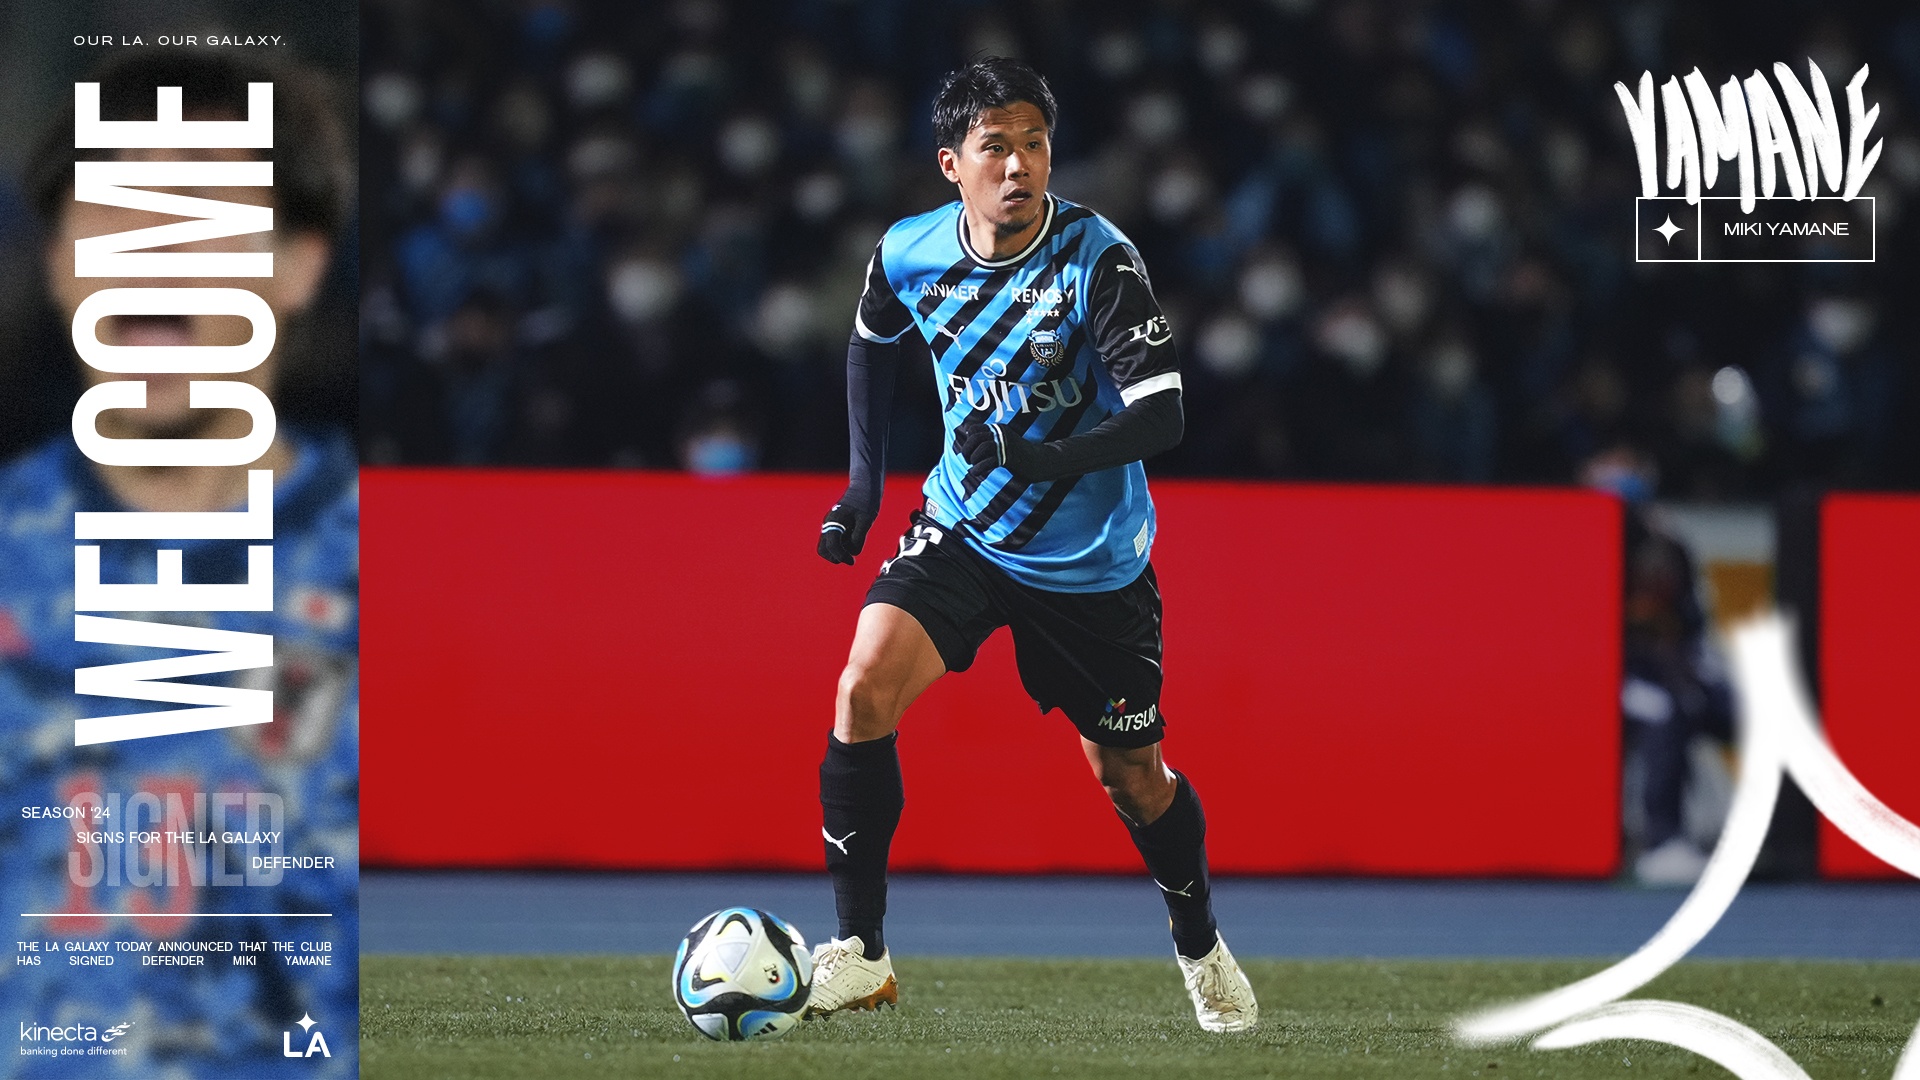 Acquire Japanese International Defender Miki Yamane from Kawasaki Frontale | LA Galaxy – LA Galaxy